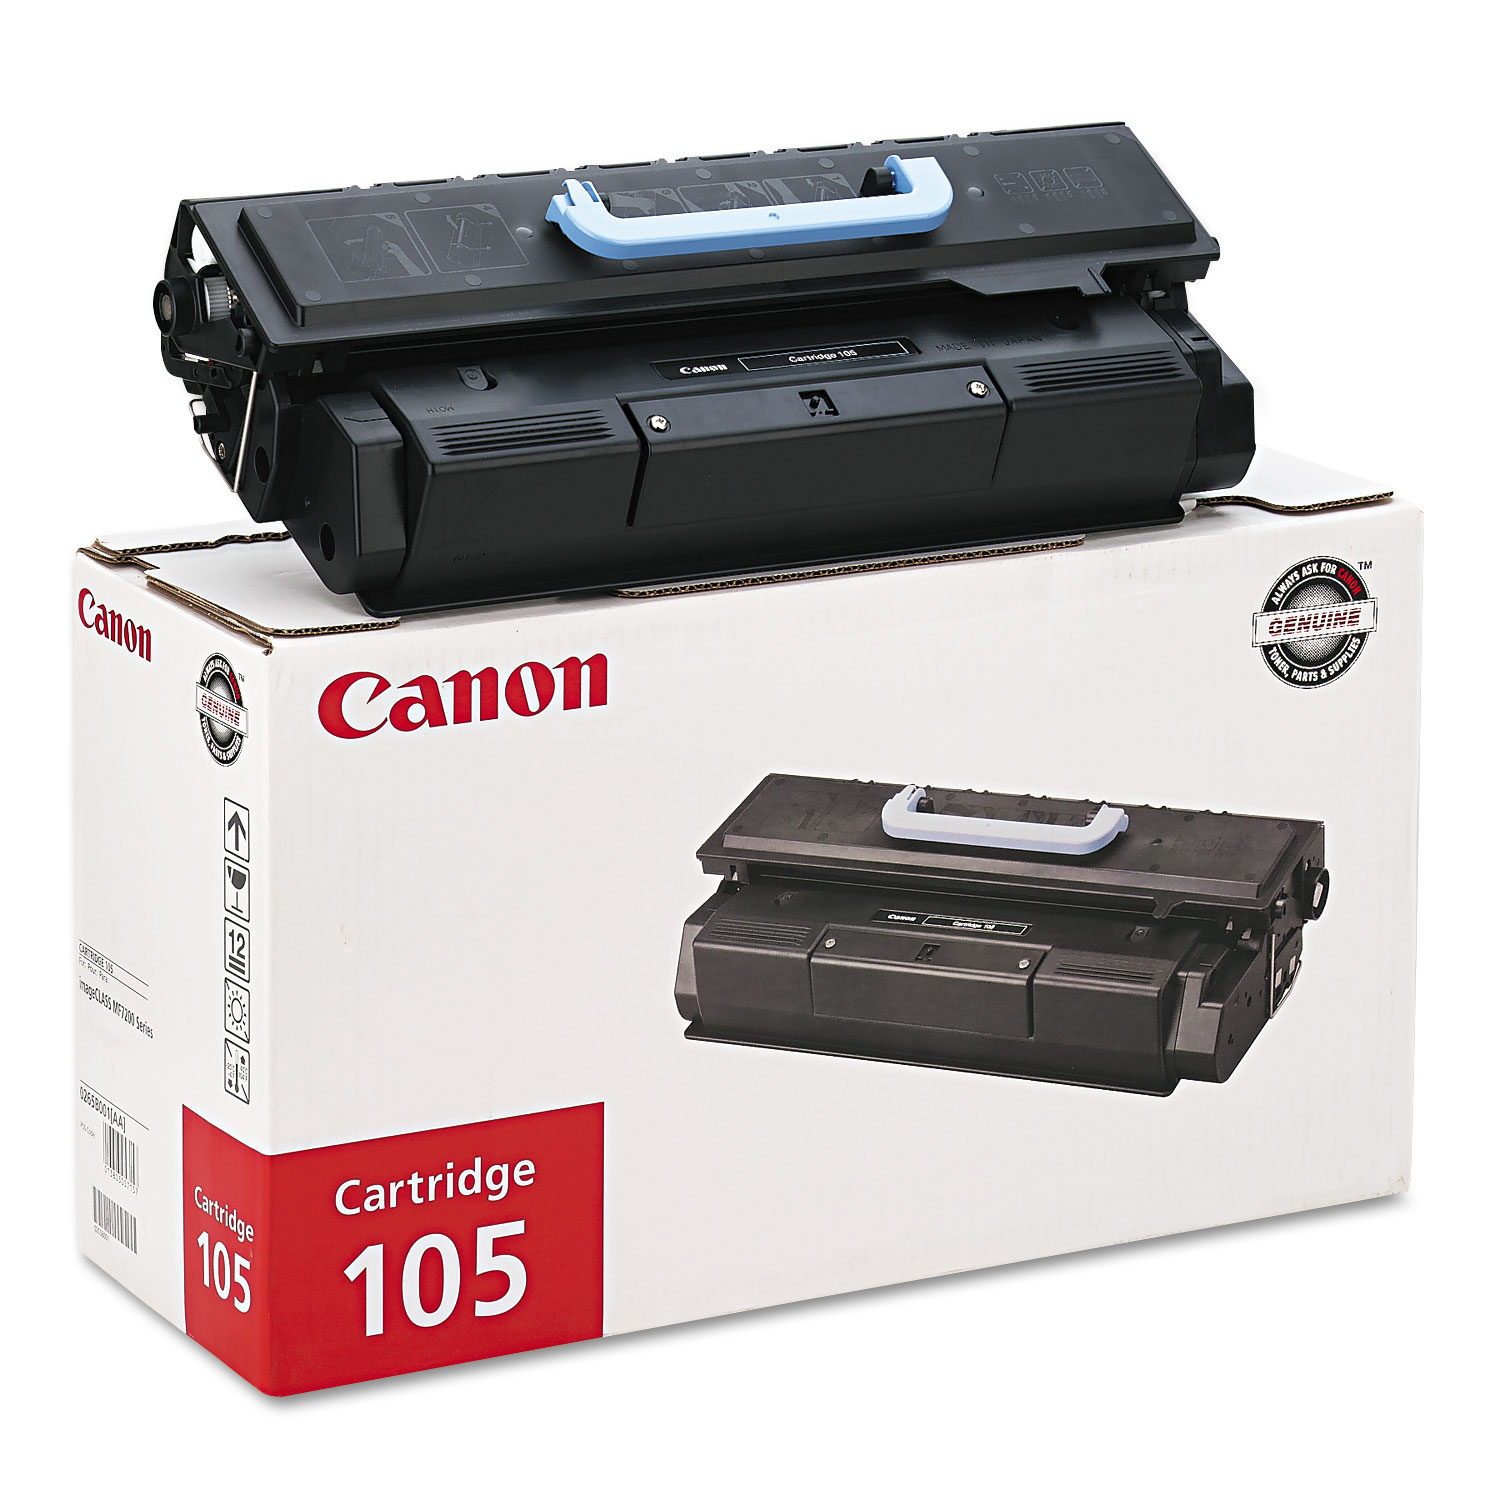  Canon 0265B001 CART105 (105) Toner, 10000 Page-Yield, Black (CNMCART105) 